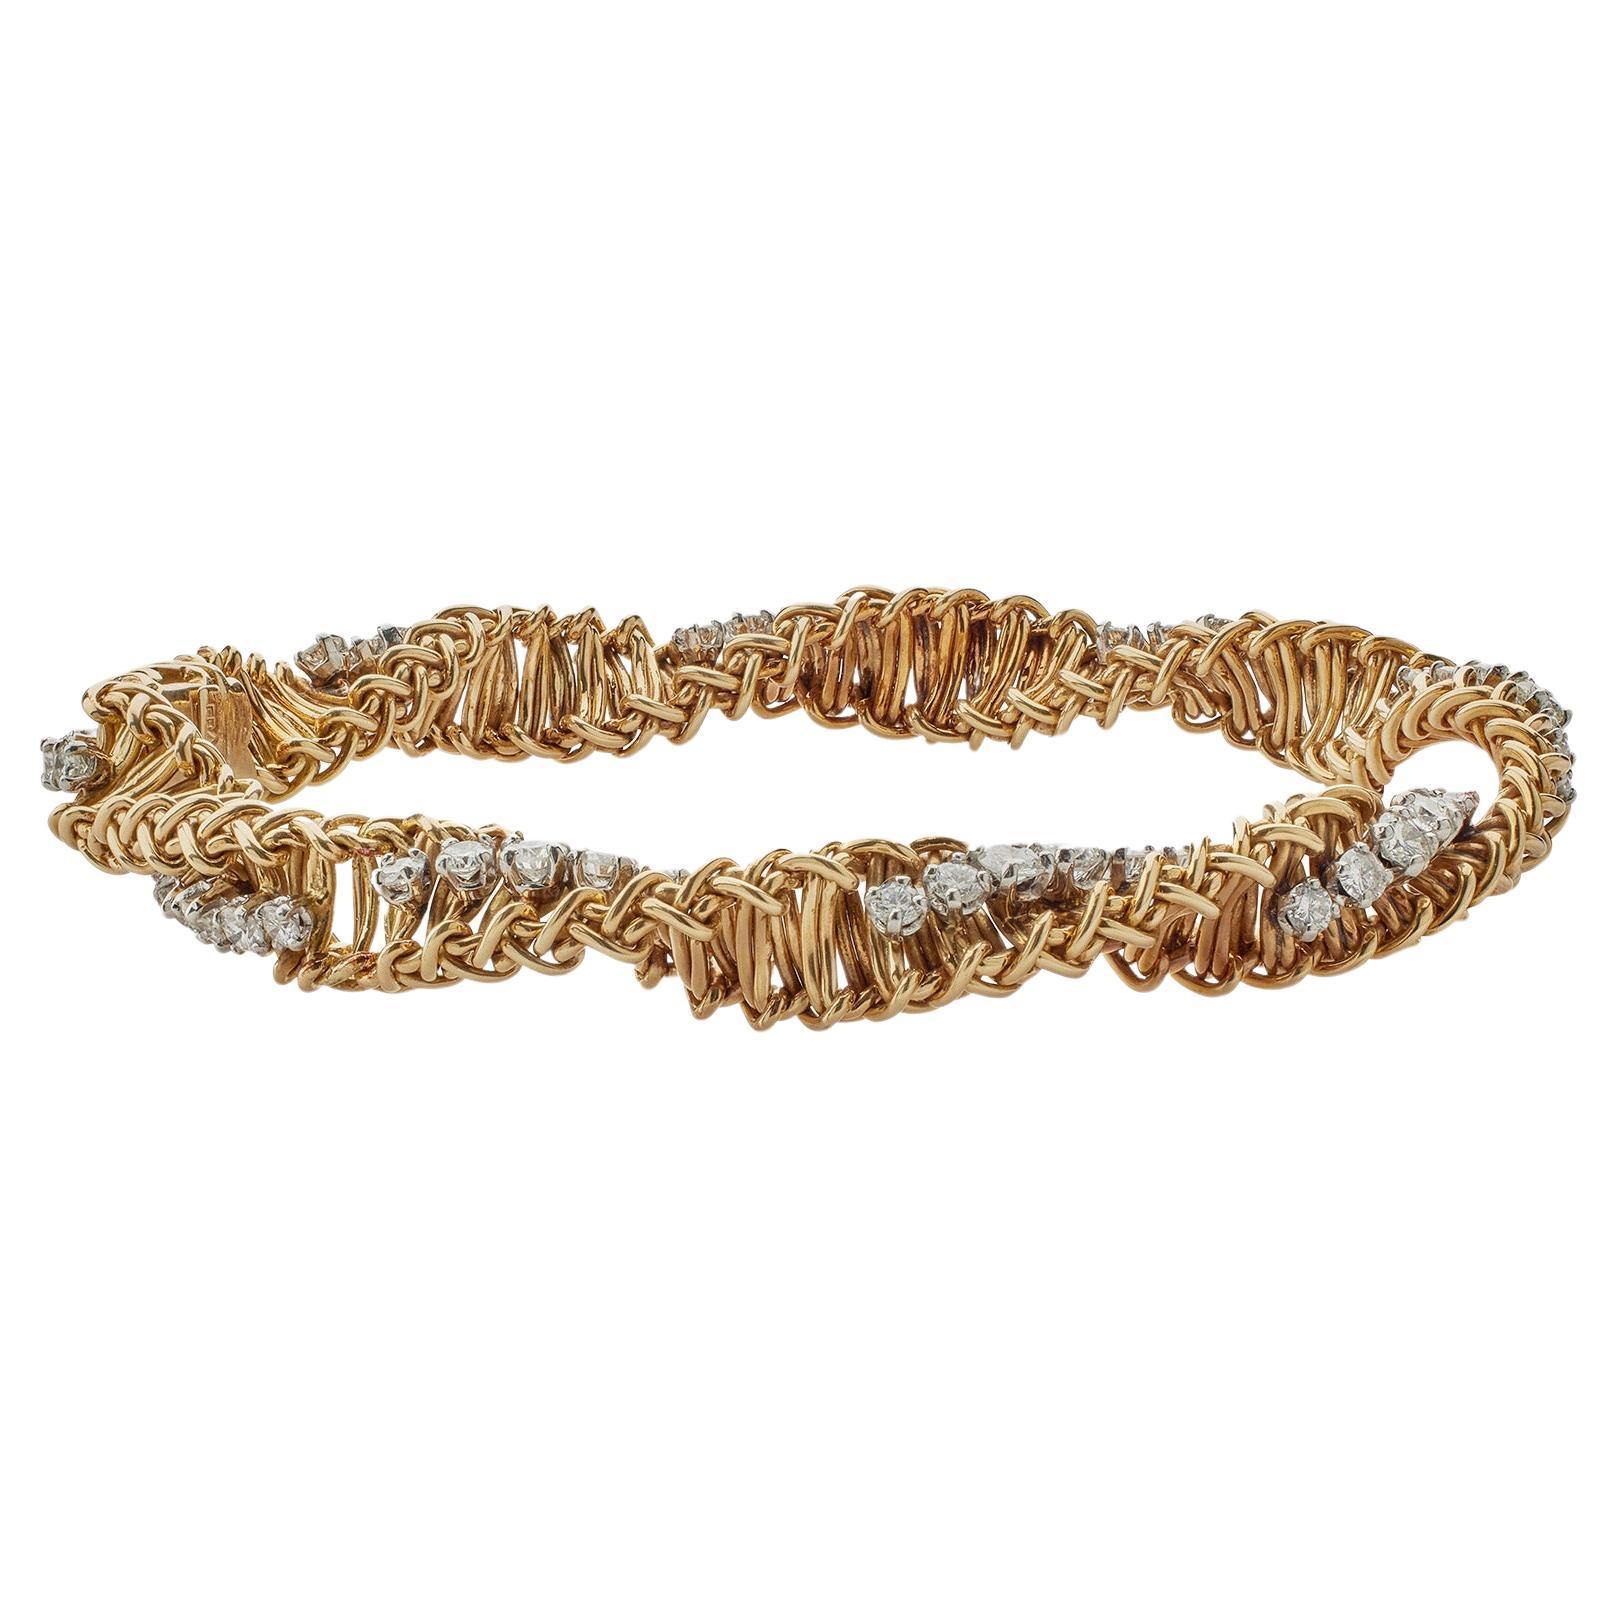 Tiffany & Co. France 18K Gold and Diamond Ropetwist Bracelet